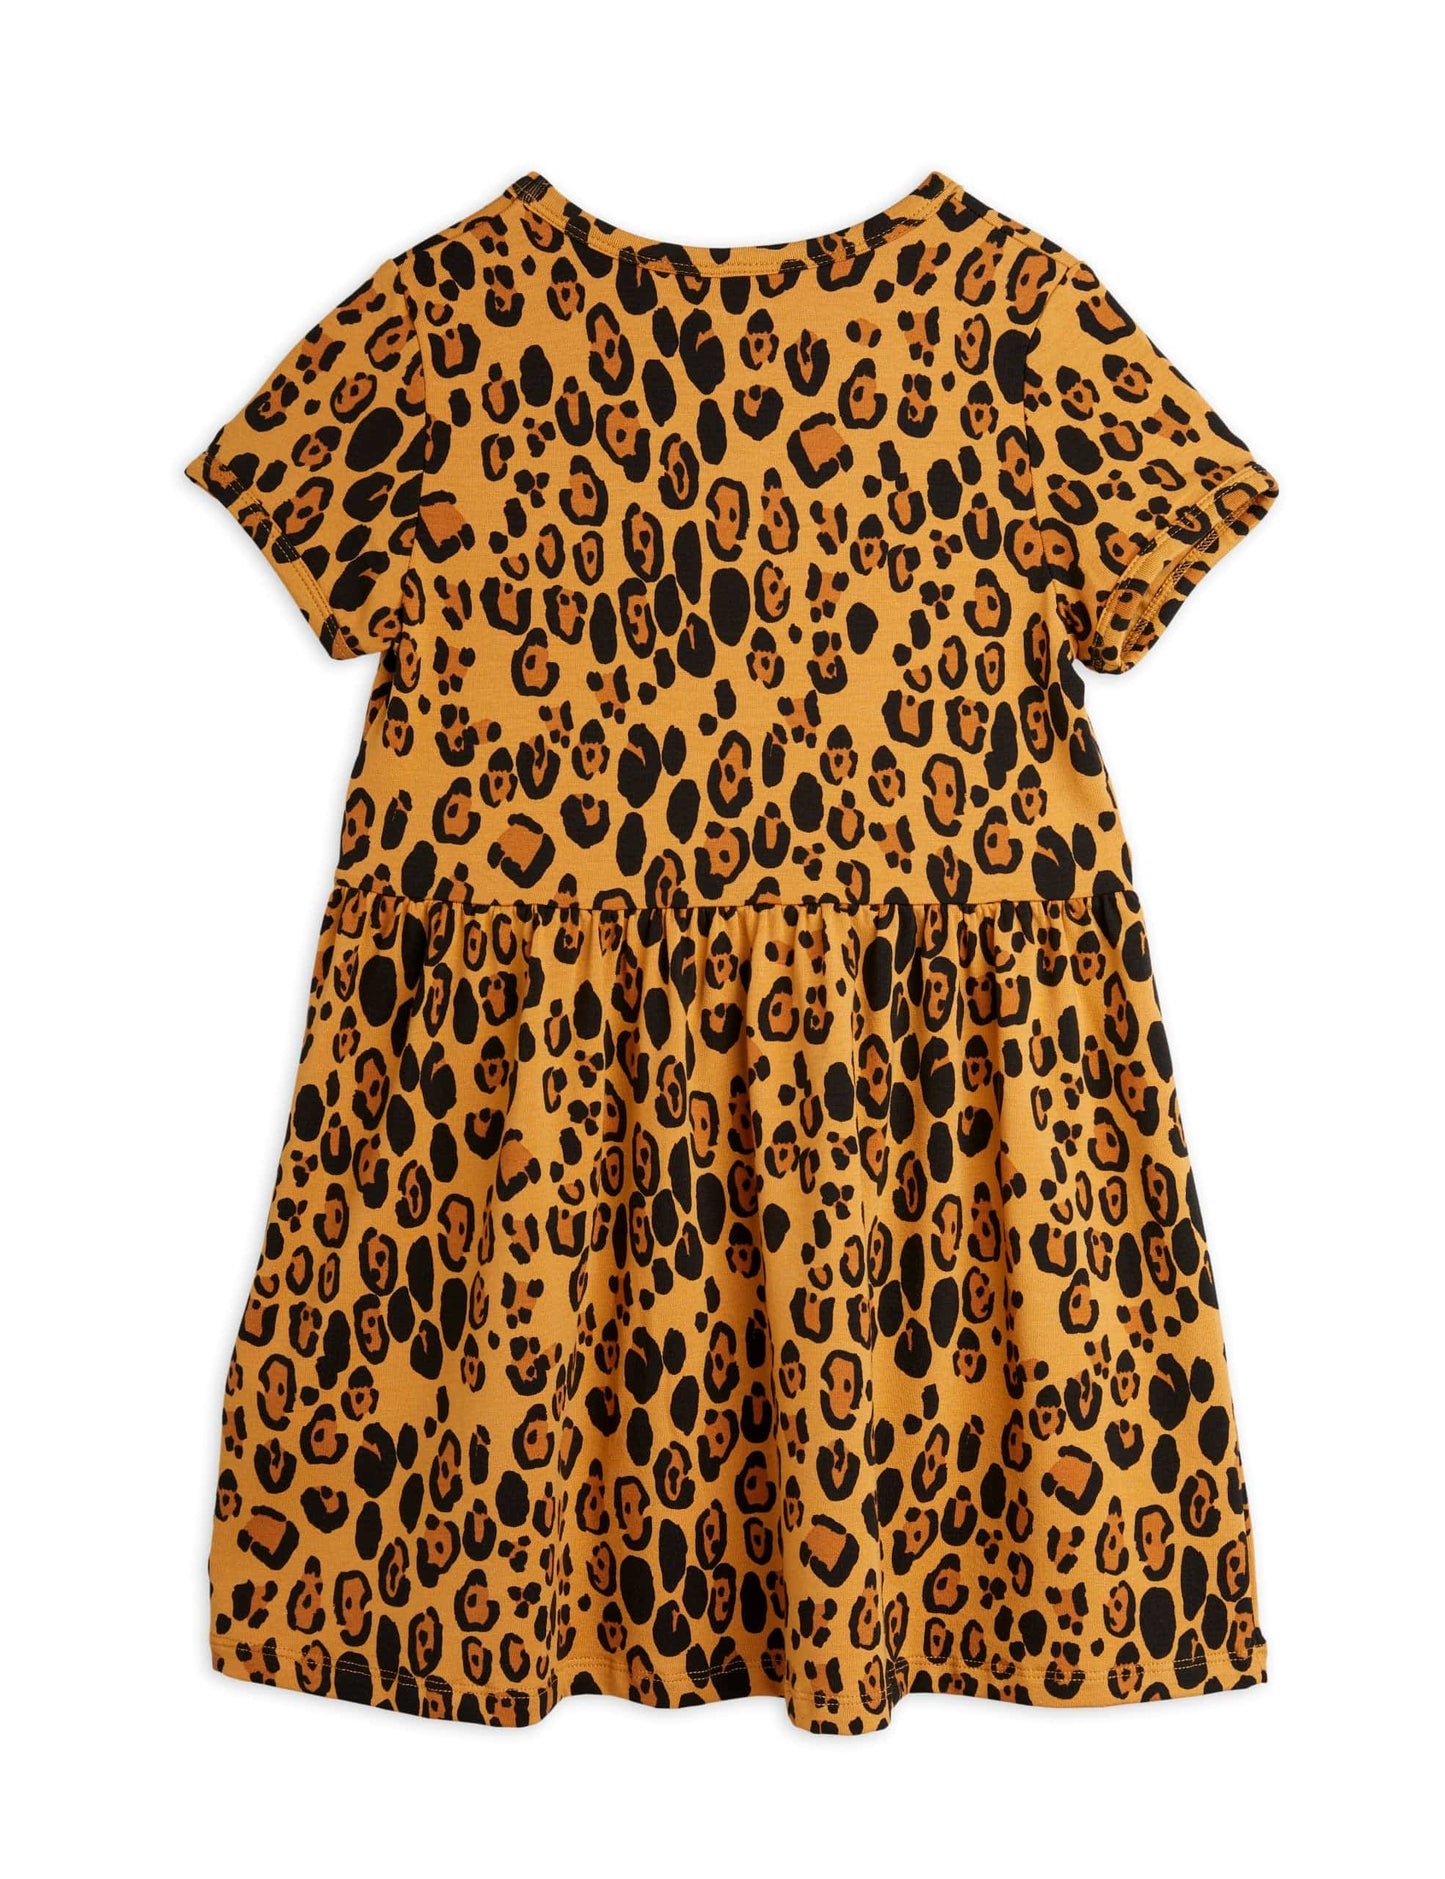 Basic Leopard Short Sleeve Dress